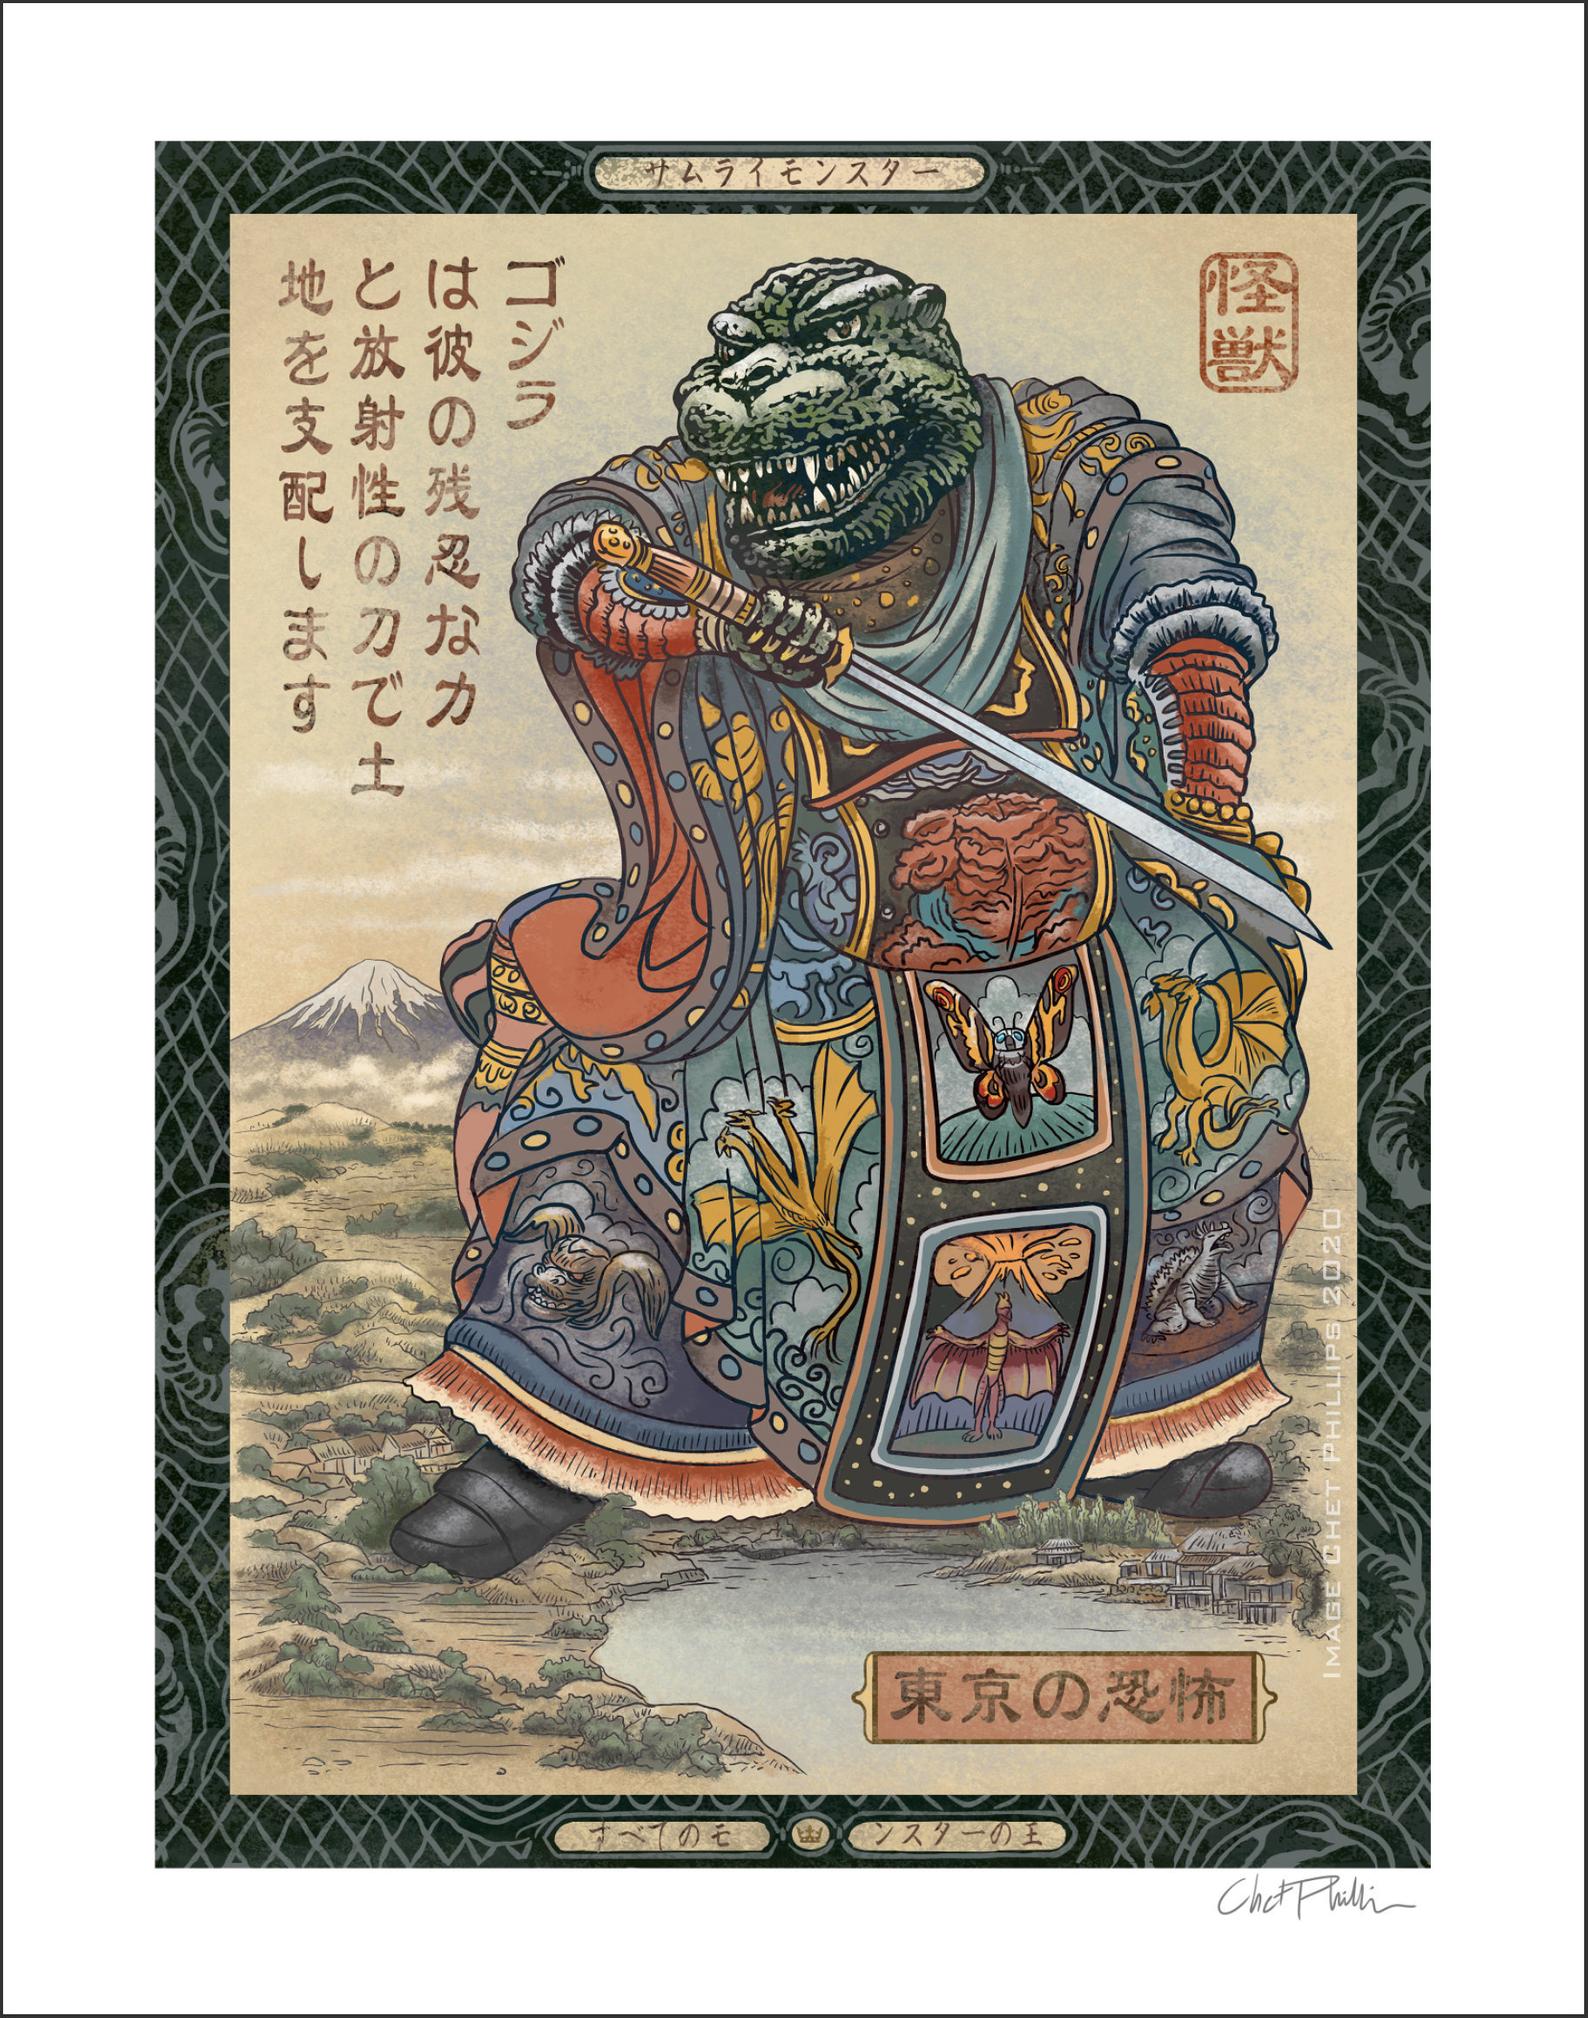 King of the Monsters Samurai 11 x 14 print